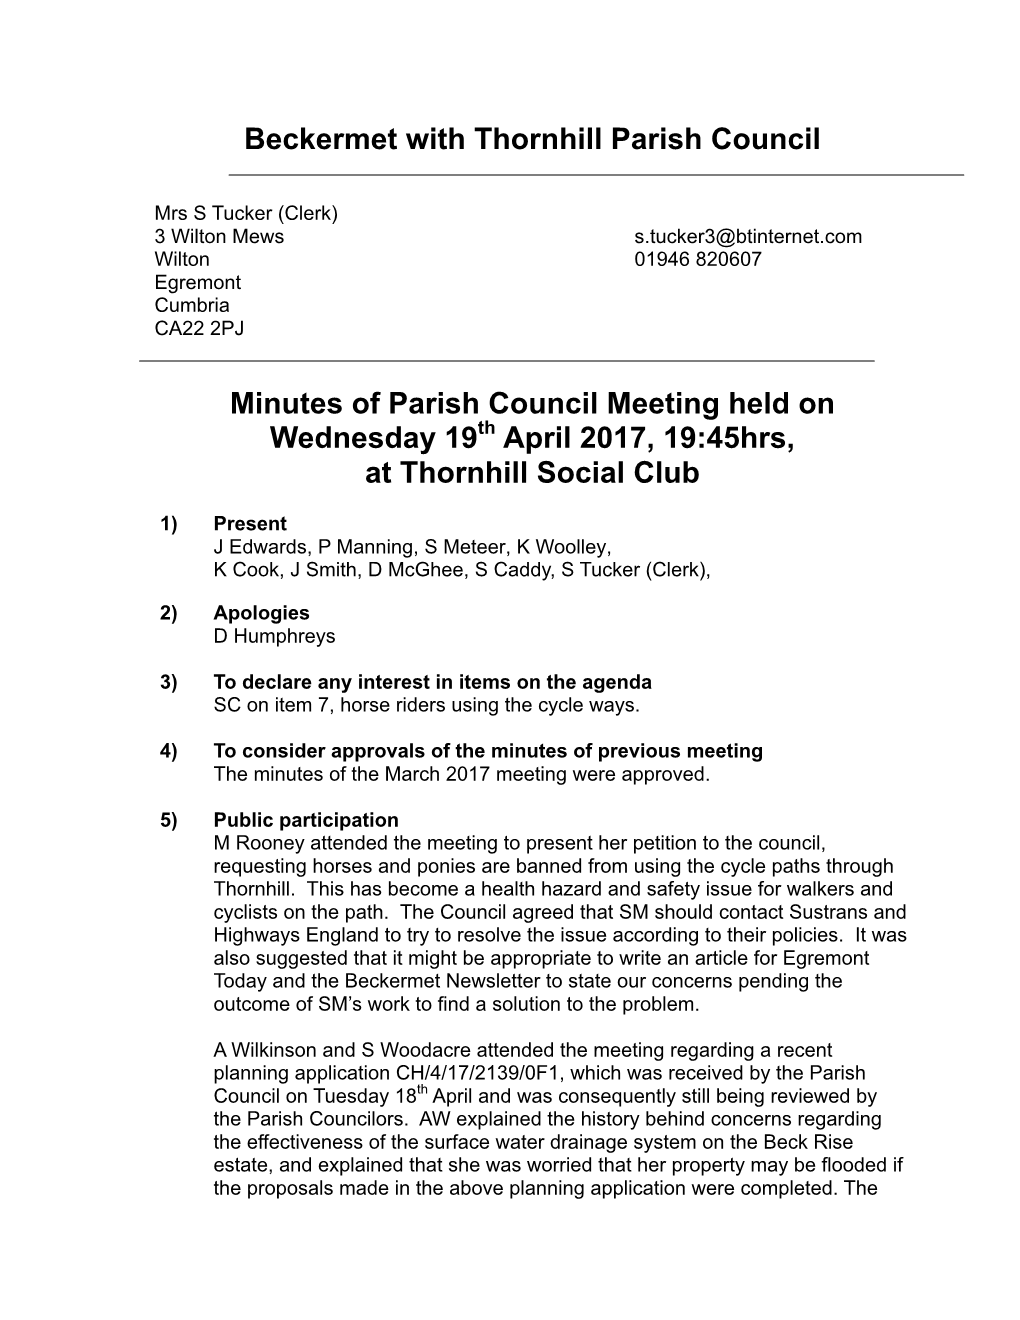 Beckermet with Thornhill Parish Council Minutes of Parish Council